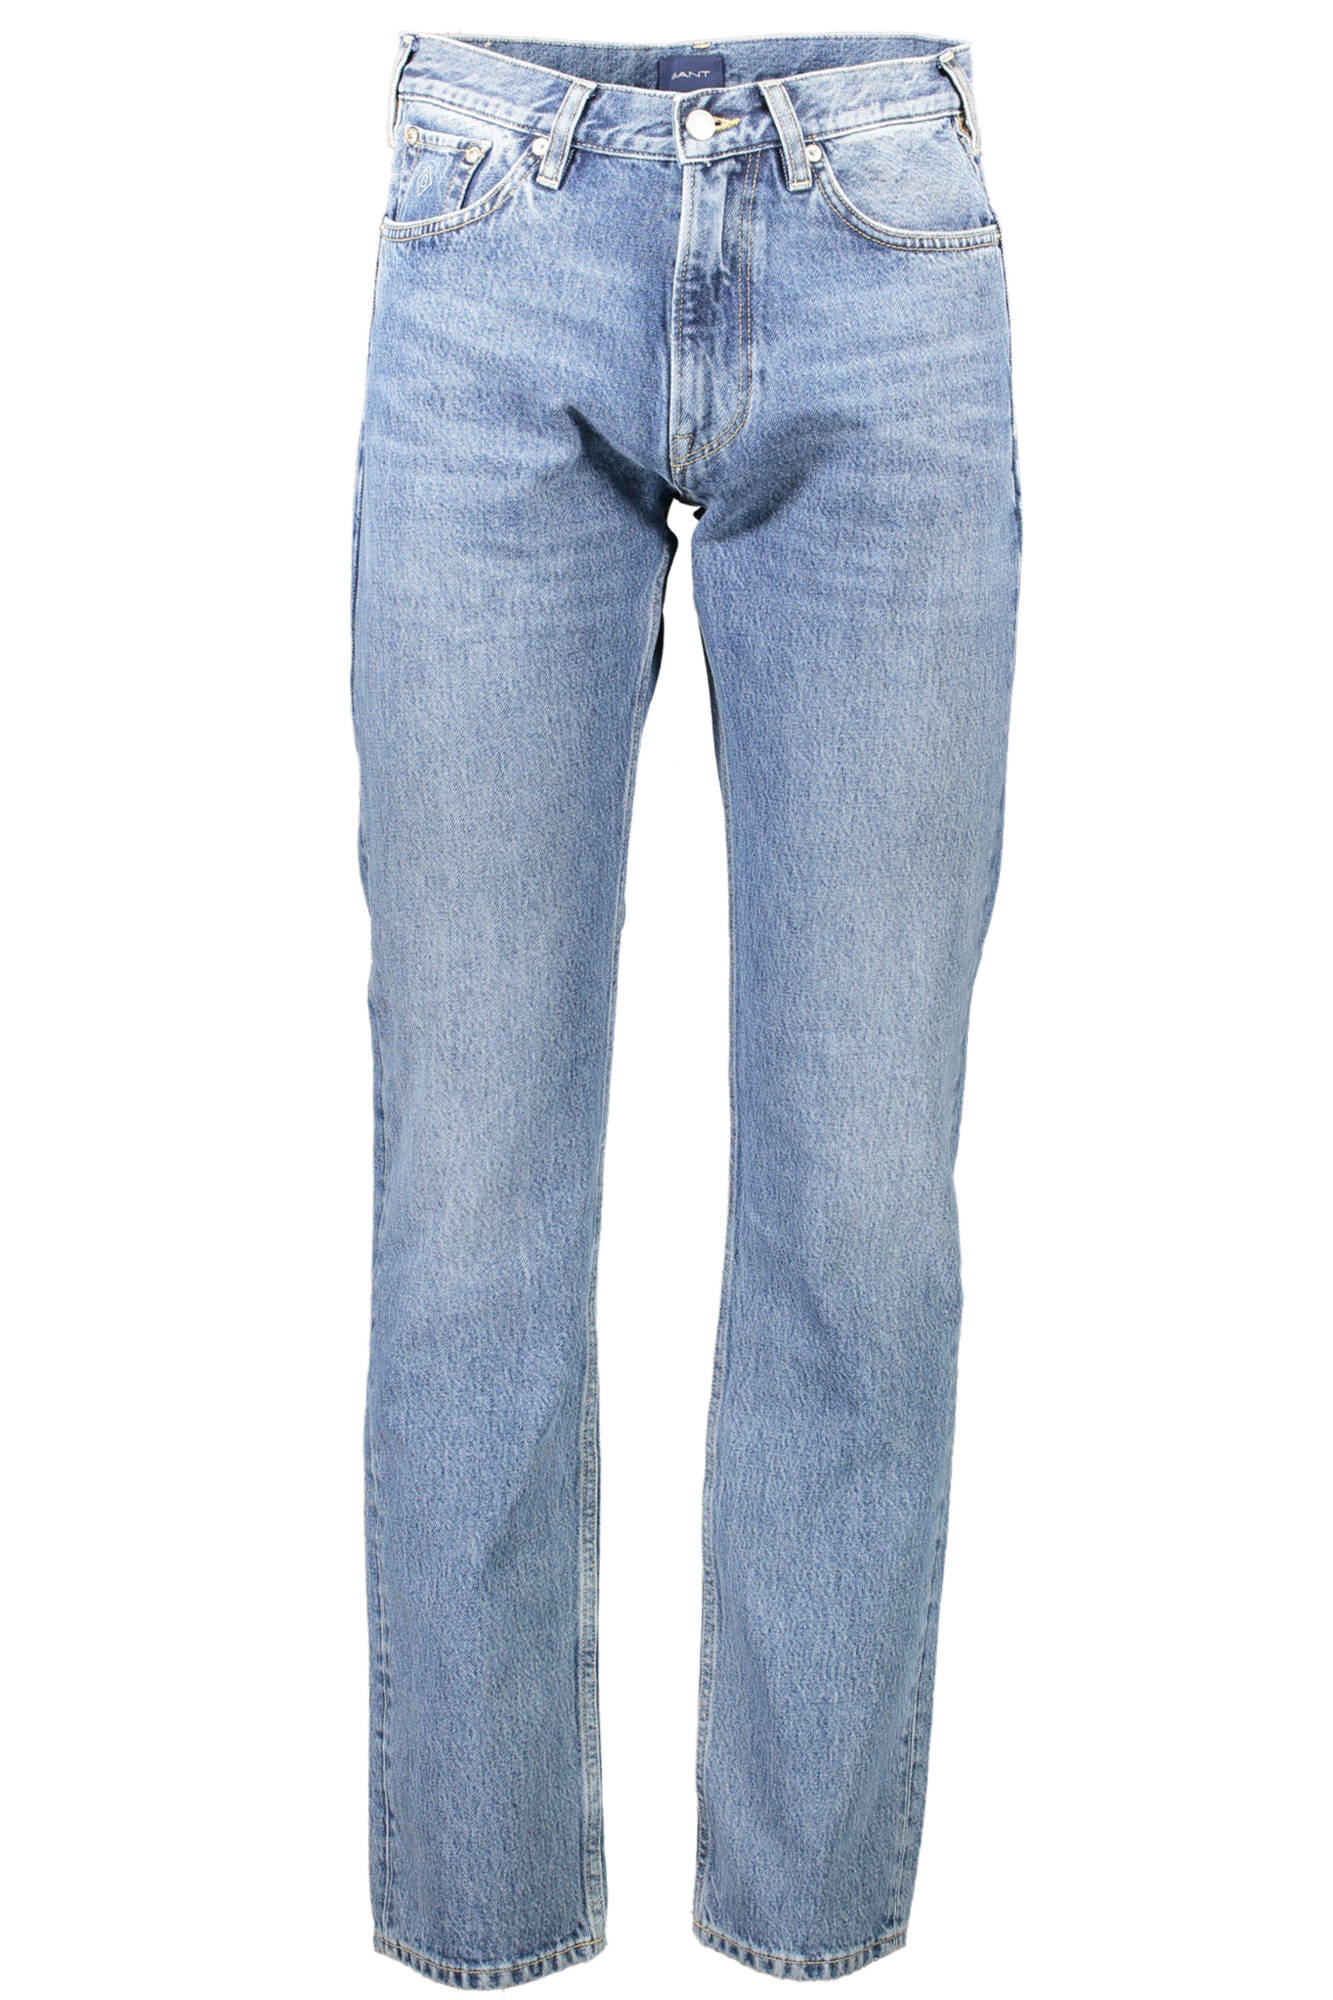 Gant Jeans Uomo celeste cotone SG289 taglia W30_L34